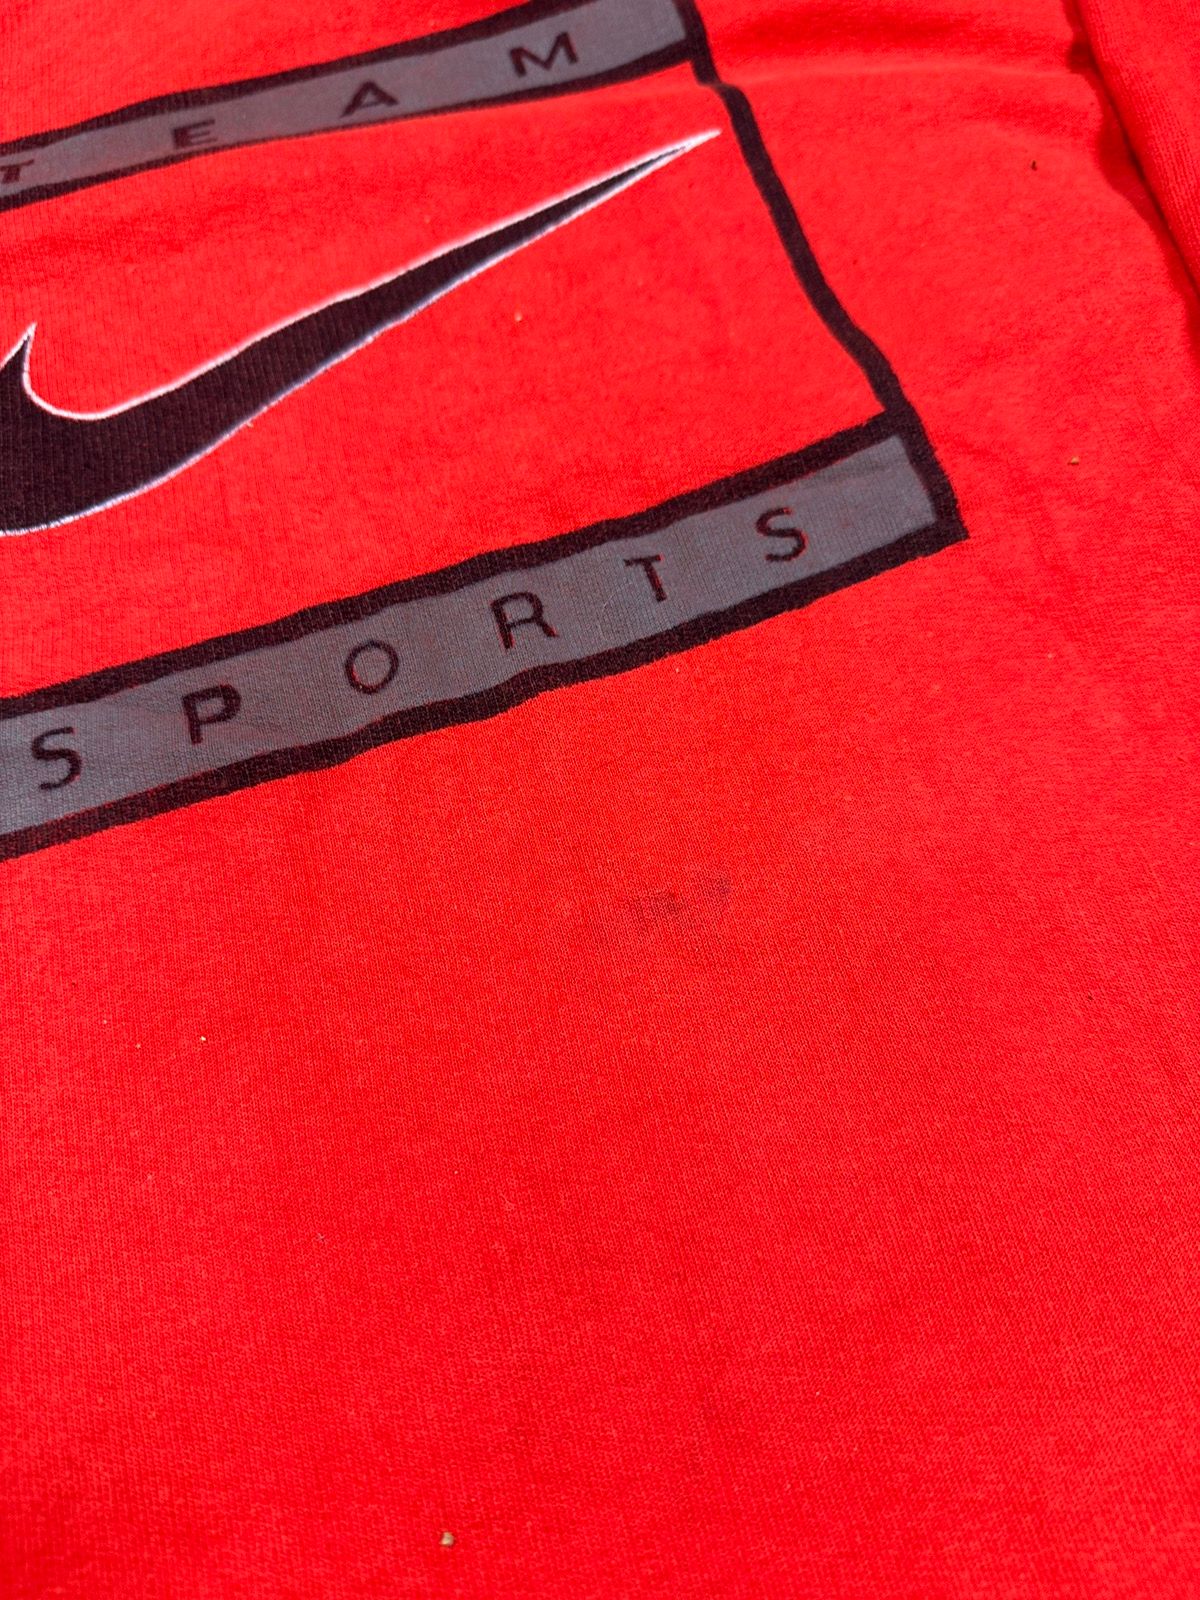 Nike ‼️ Vintage 90s Nike Duke Red Trashed Crewneck Bootleg Size US L / EU 52-54 / 3 - 8 Thumbnail